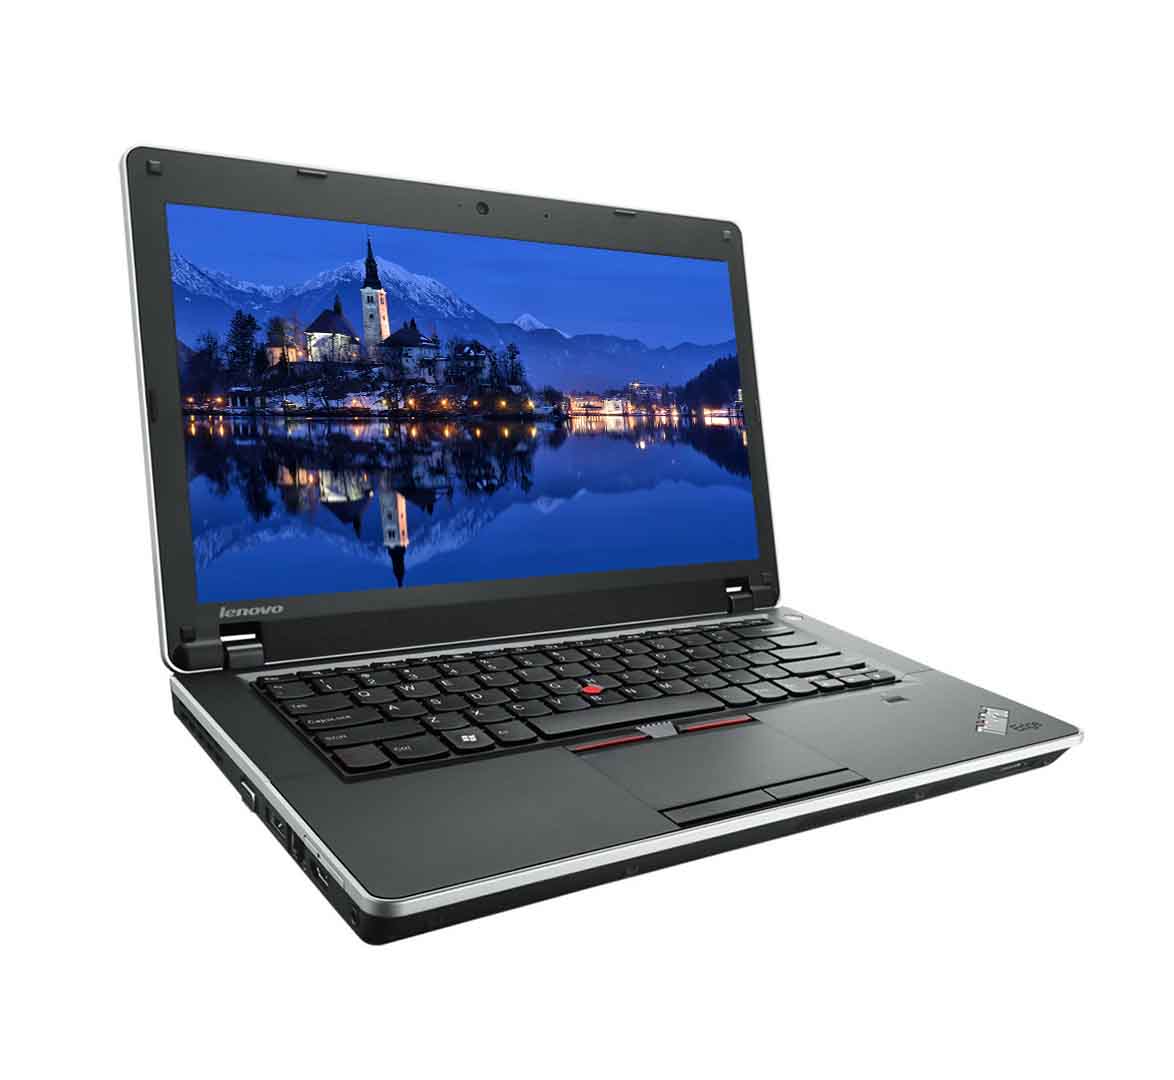 Lenovo ThinkPad Edge 15 Business Laptop, Intel Core i3-1st Gen CPU, 4GB RAM, 320GB HDD, 15.6 inch Display, Win10 Pro, Refurbished Laptop